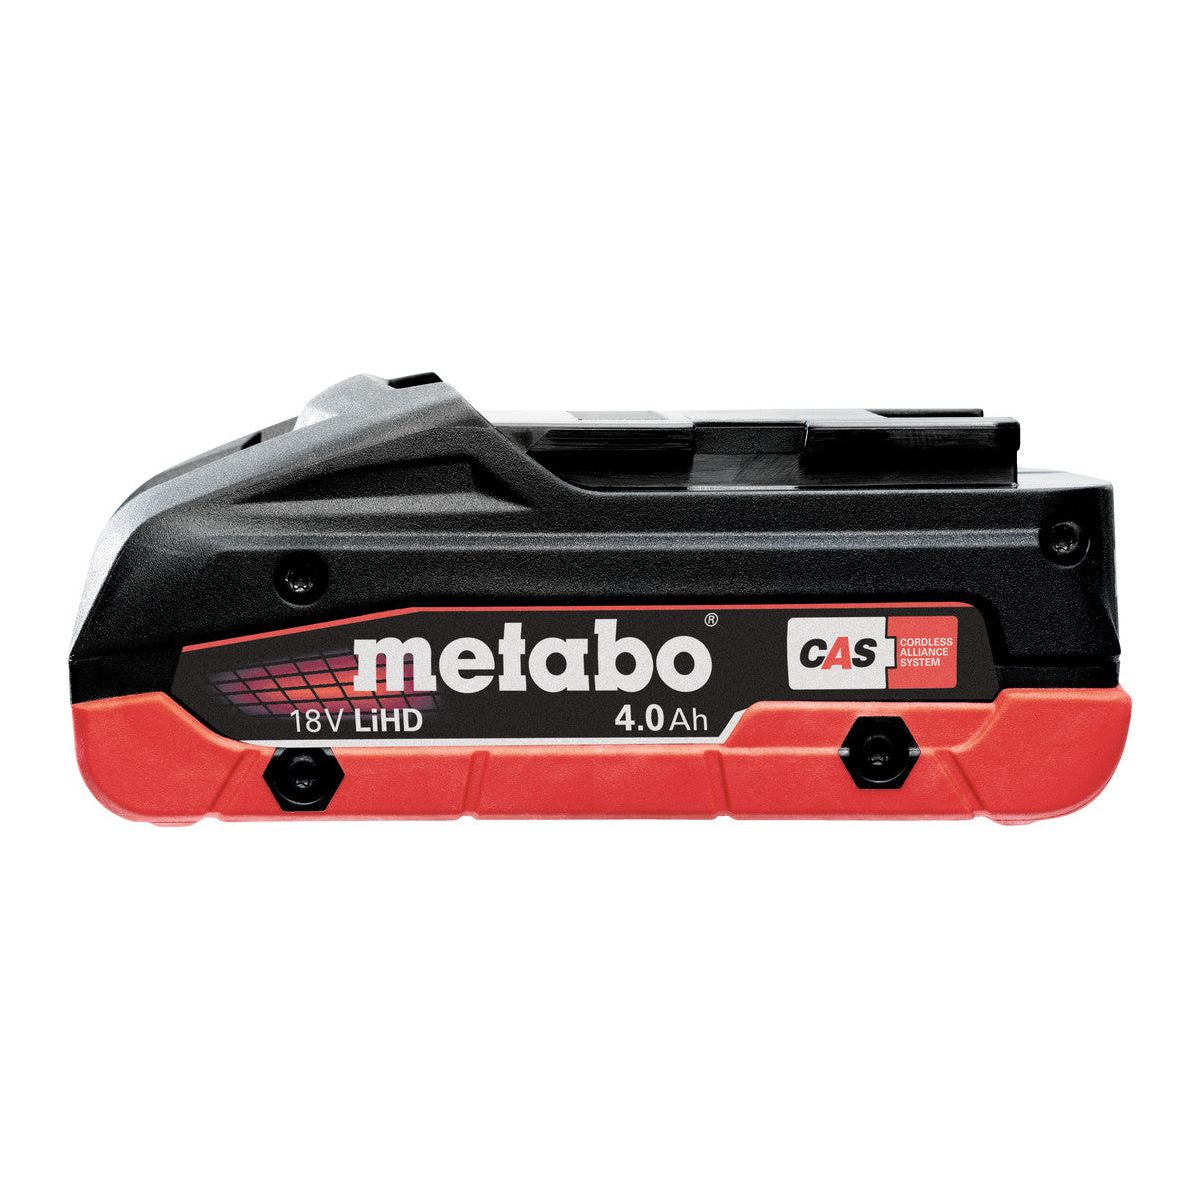 Metabo Battery 18V 4.0Ah LiHD